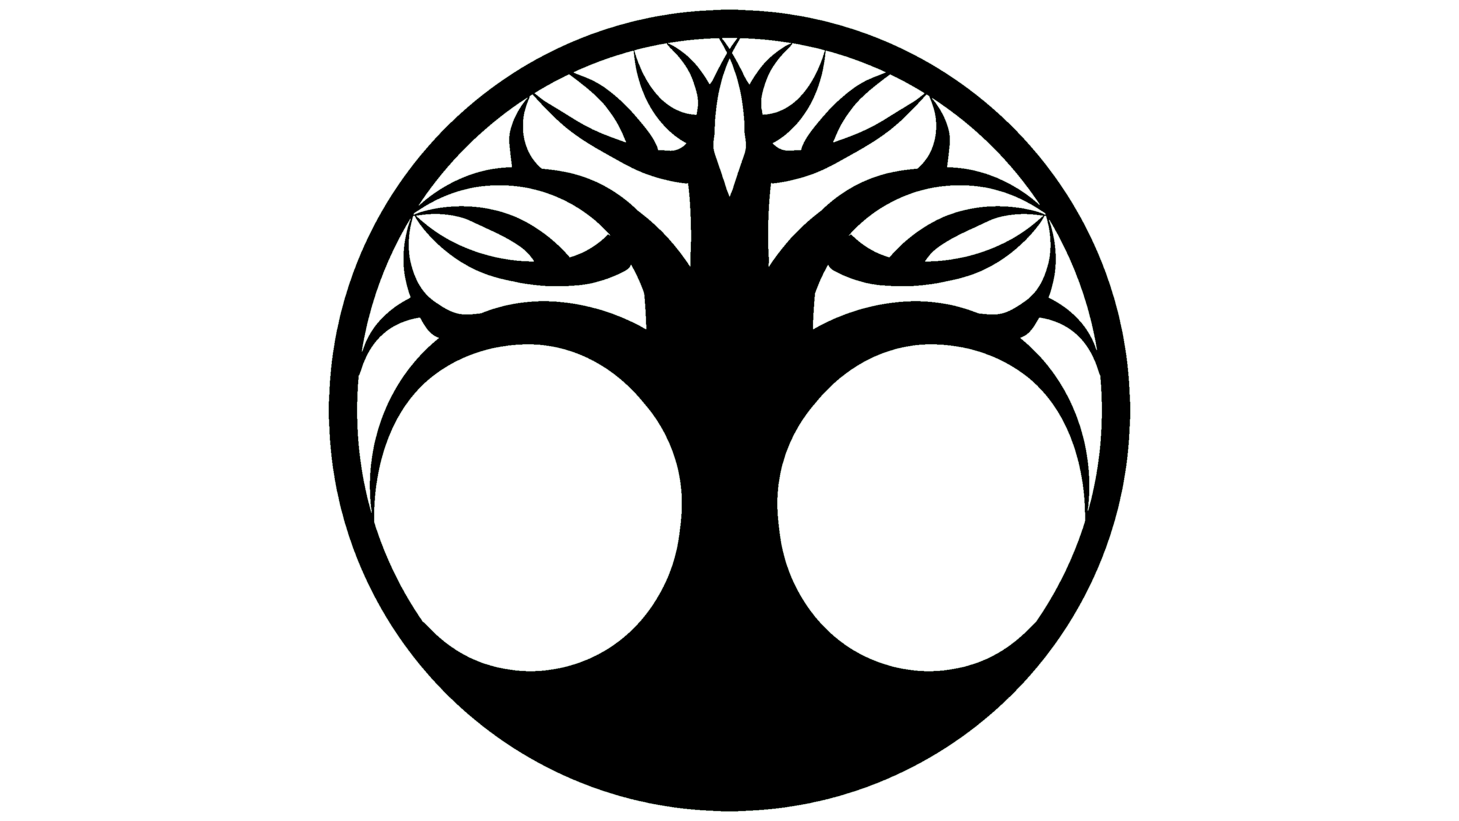 Celtic tree of life logo